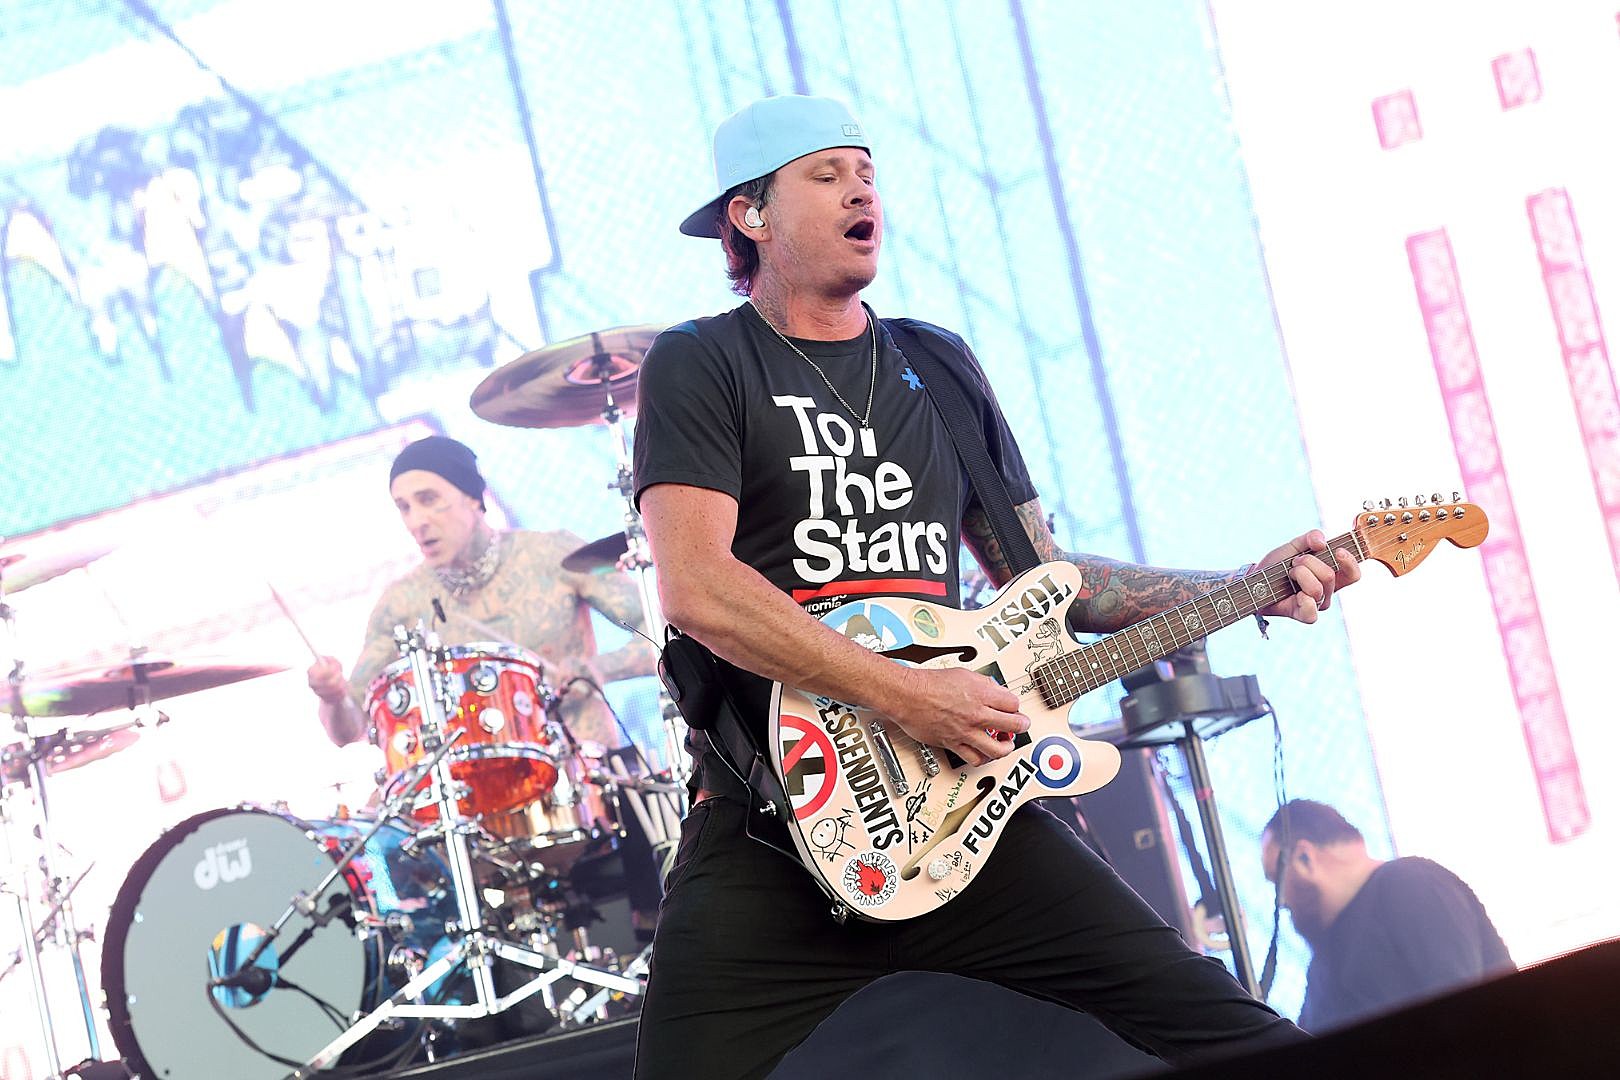 Fans Suspect blink-182’s Tom DeLonge Used Autotune at Coachella